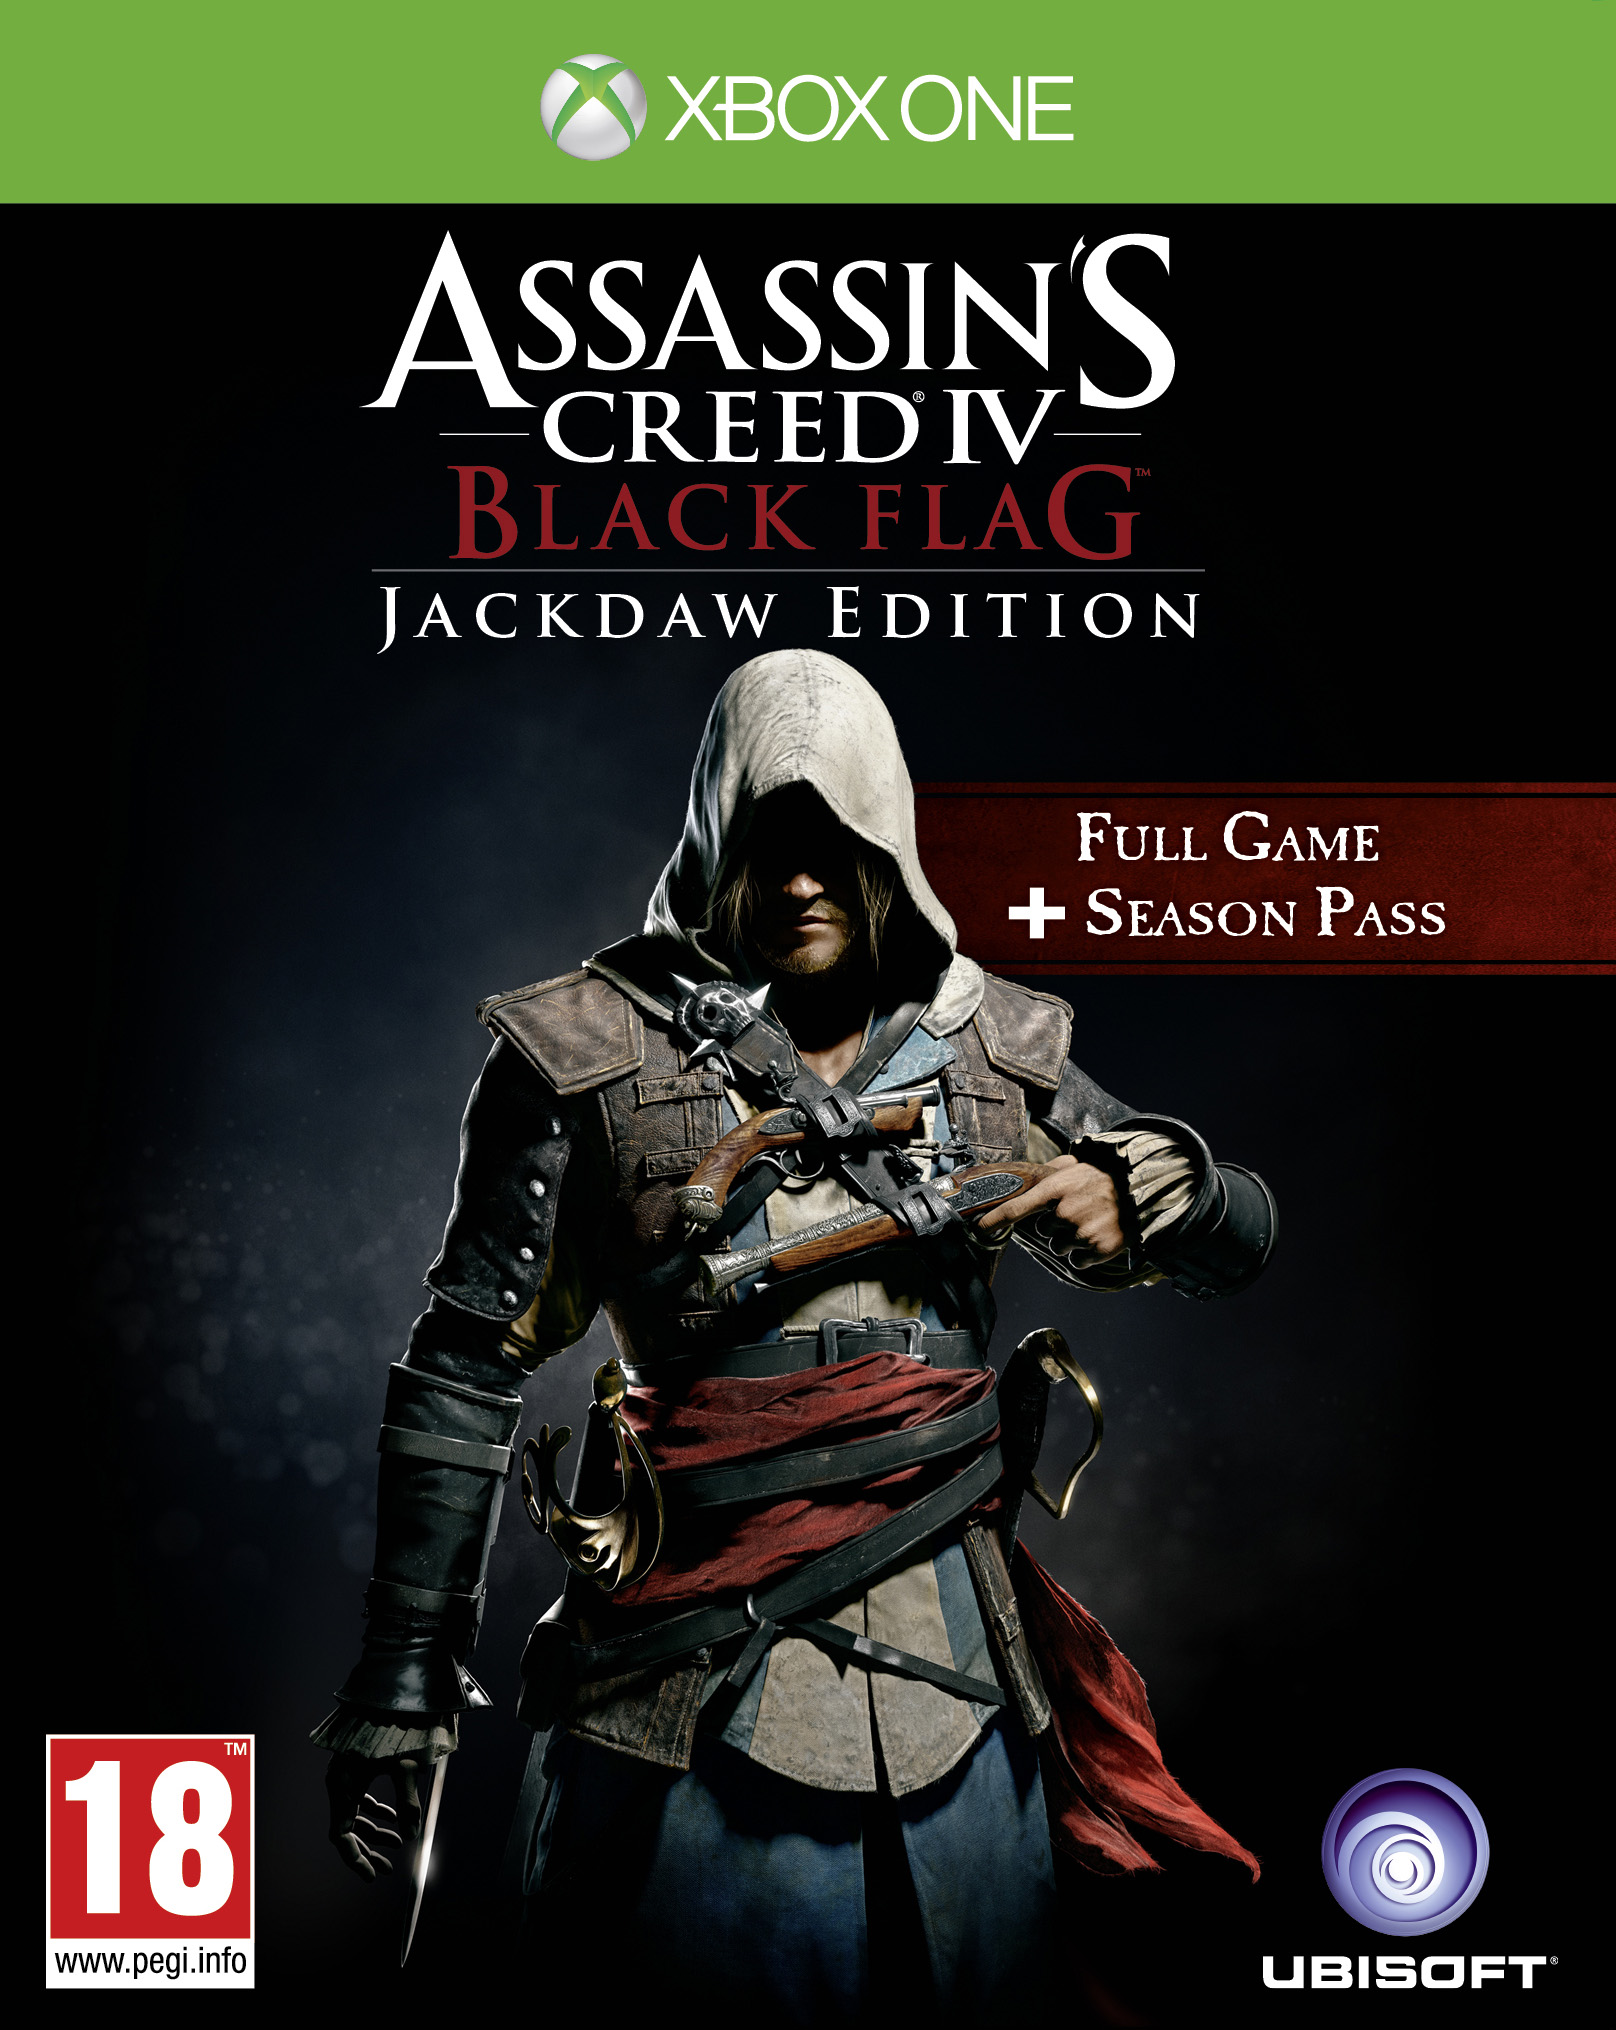 Assassin's Creed IV : Black Flag Jackdaw Edition